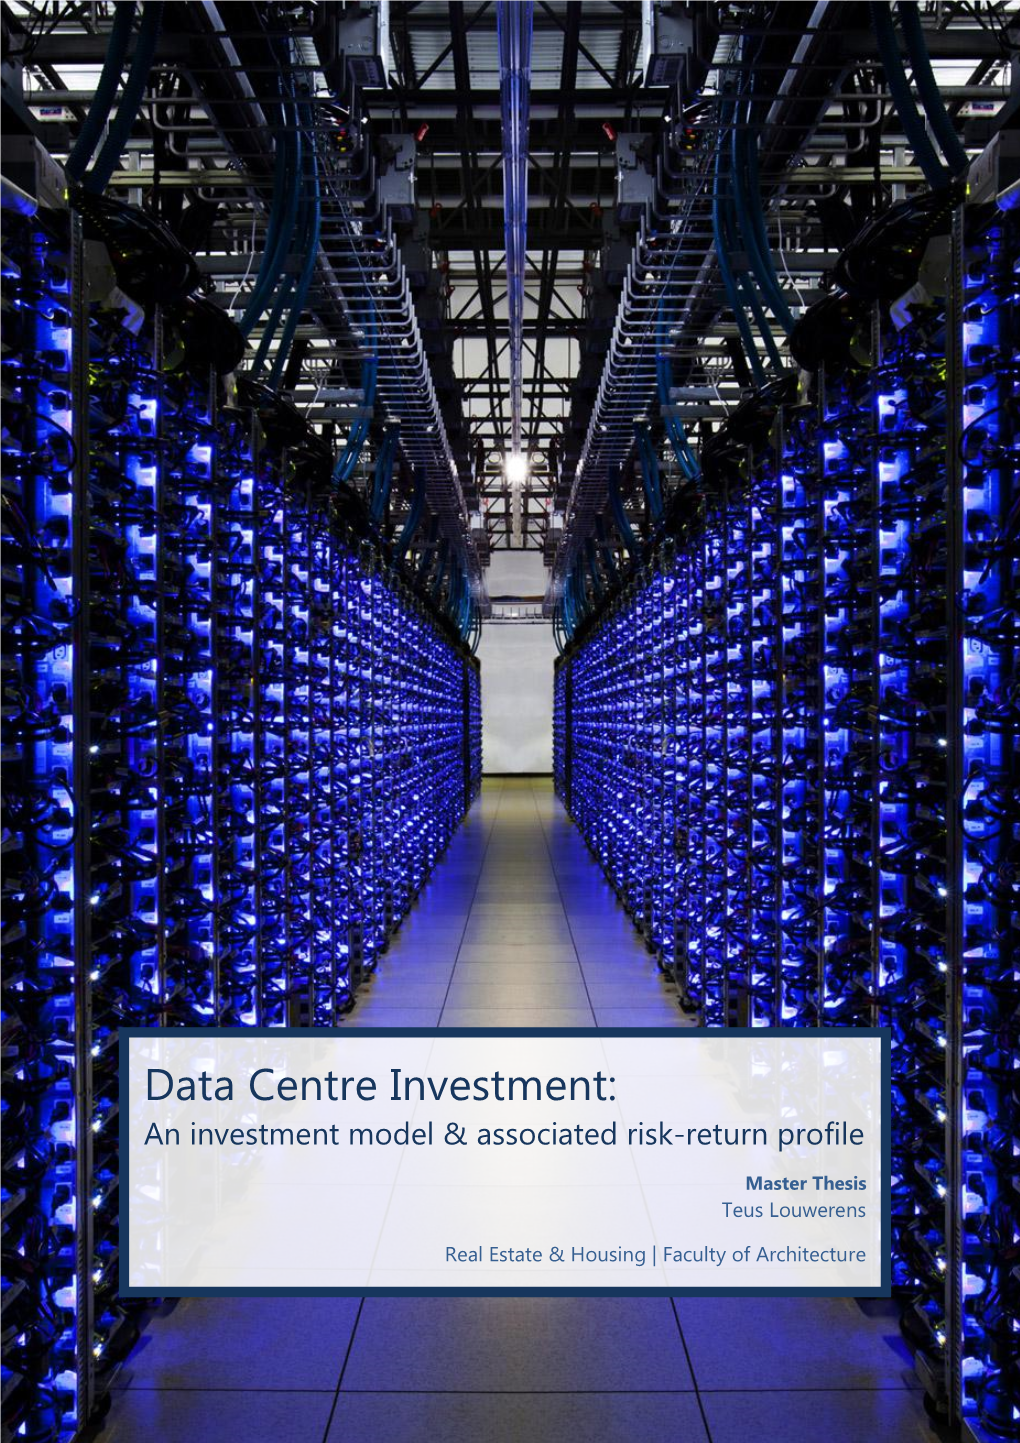 Data Centre Investment: an Investment Model & Associated Risk-Return Profile